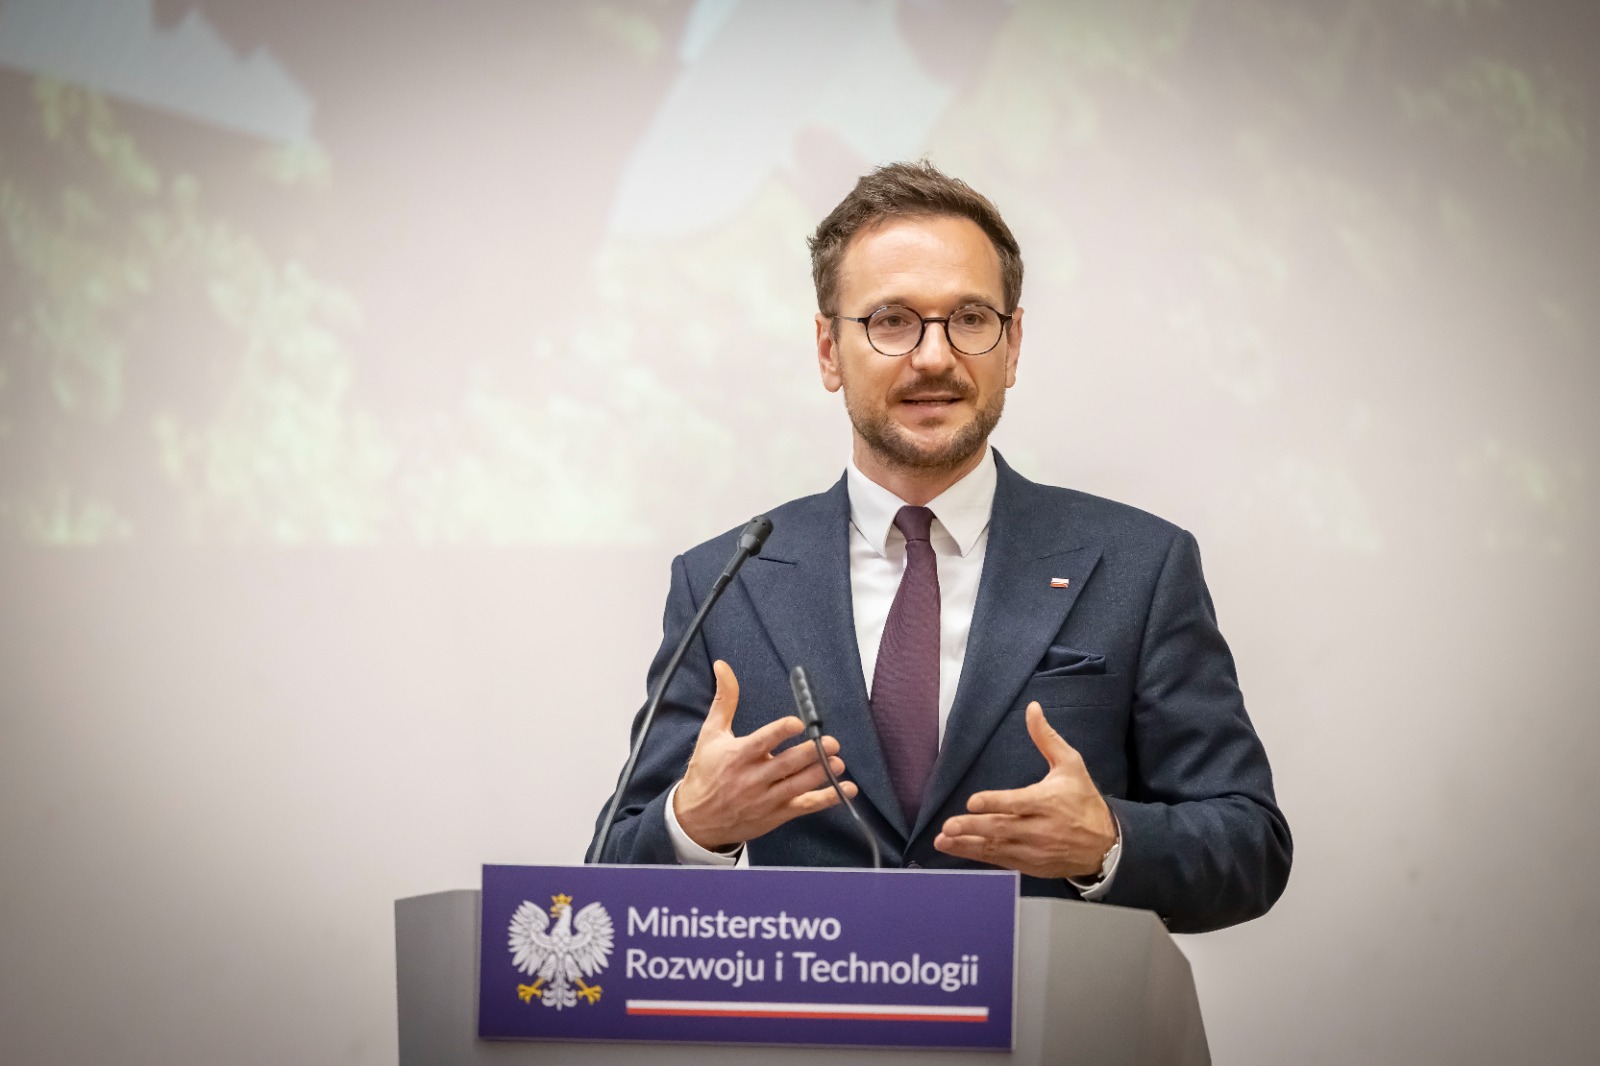 Minister Rozwoju i Technologii Waldemar Buda